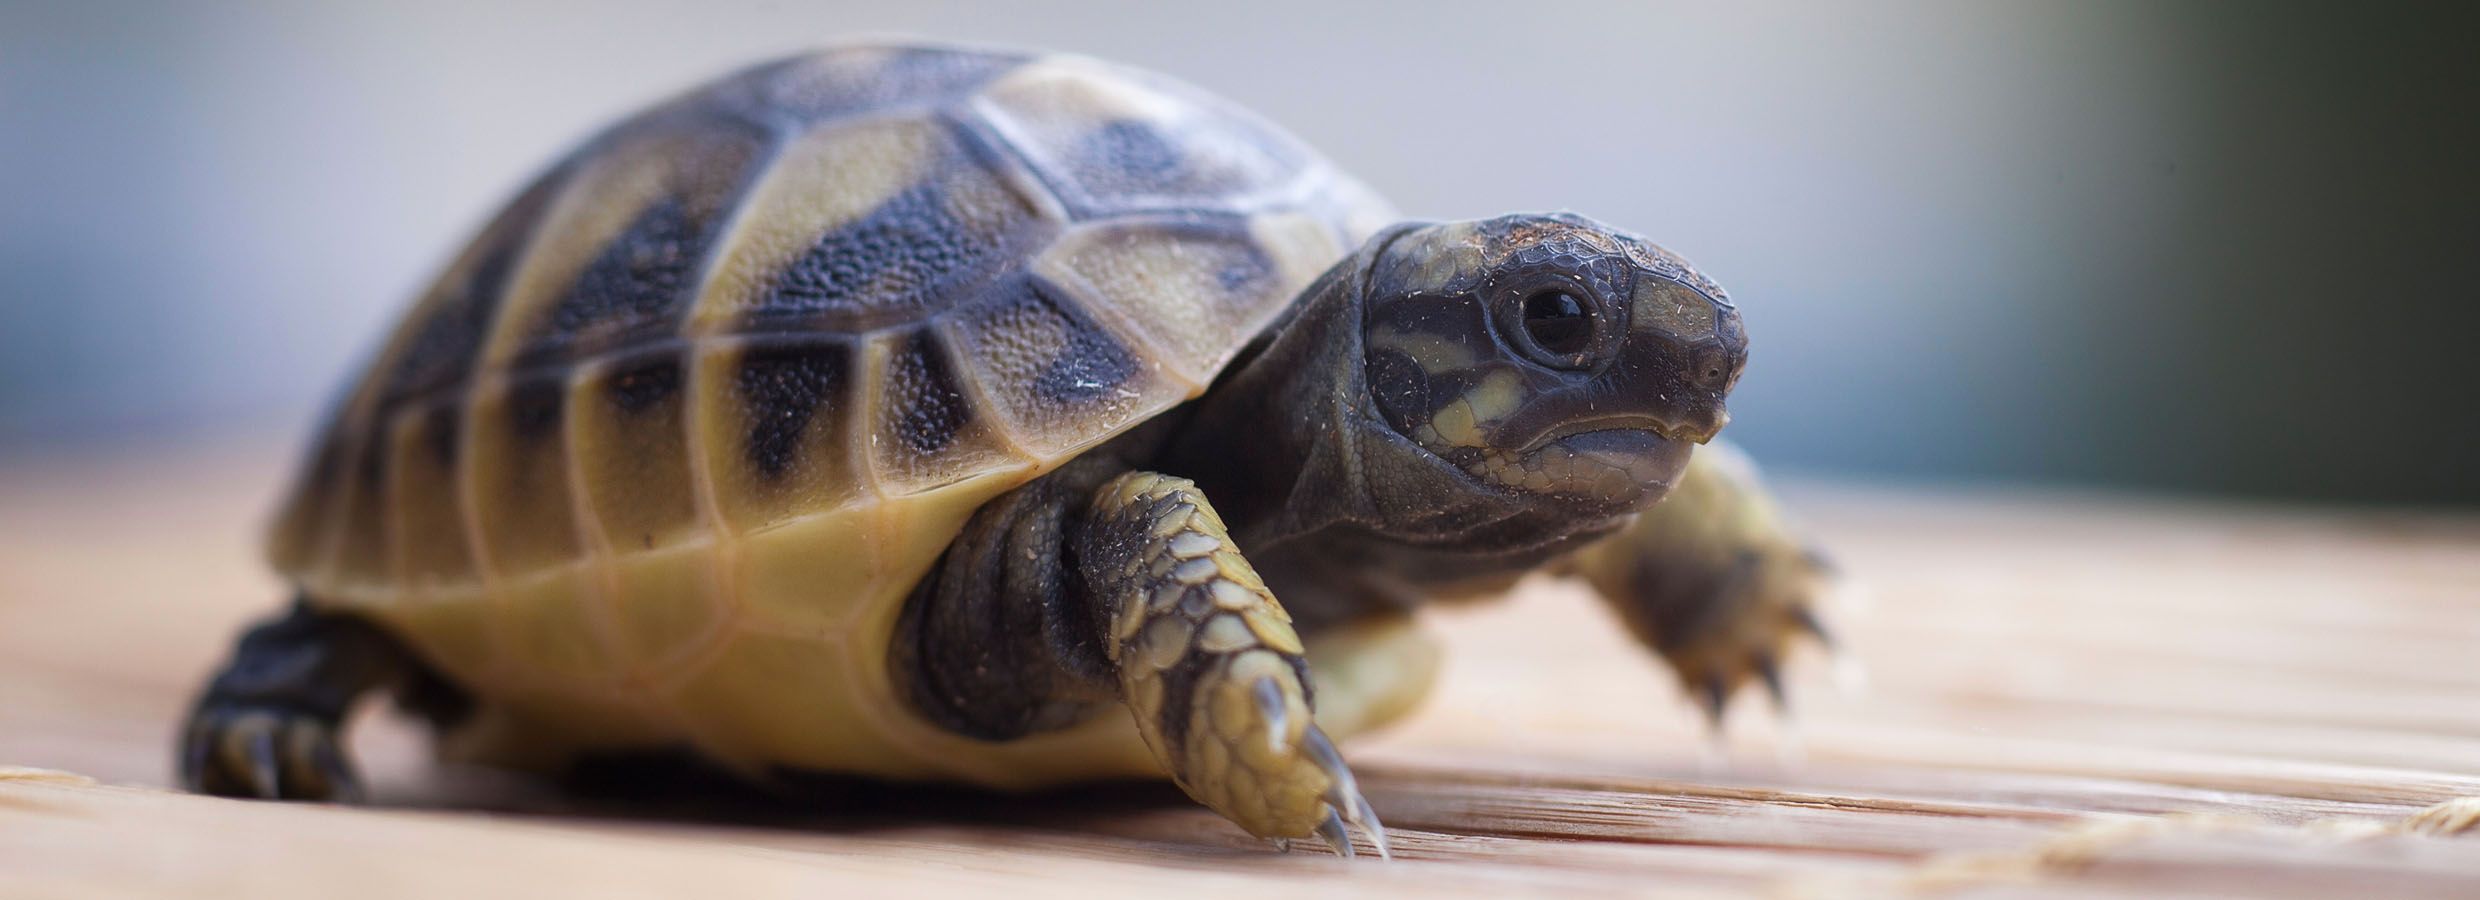 Tortoises as Pets: Care & Information